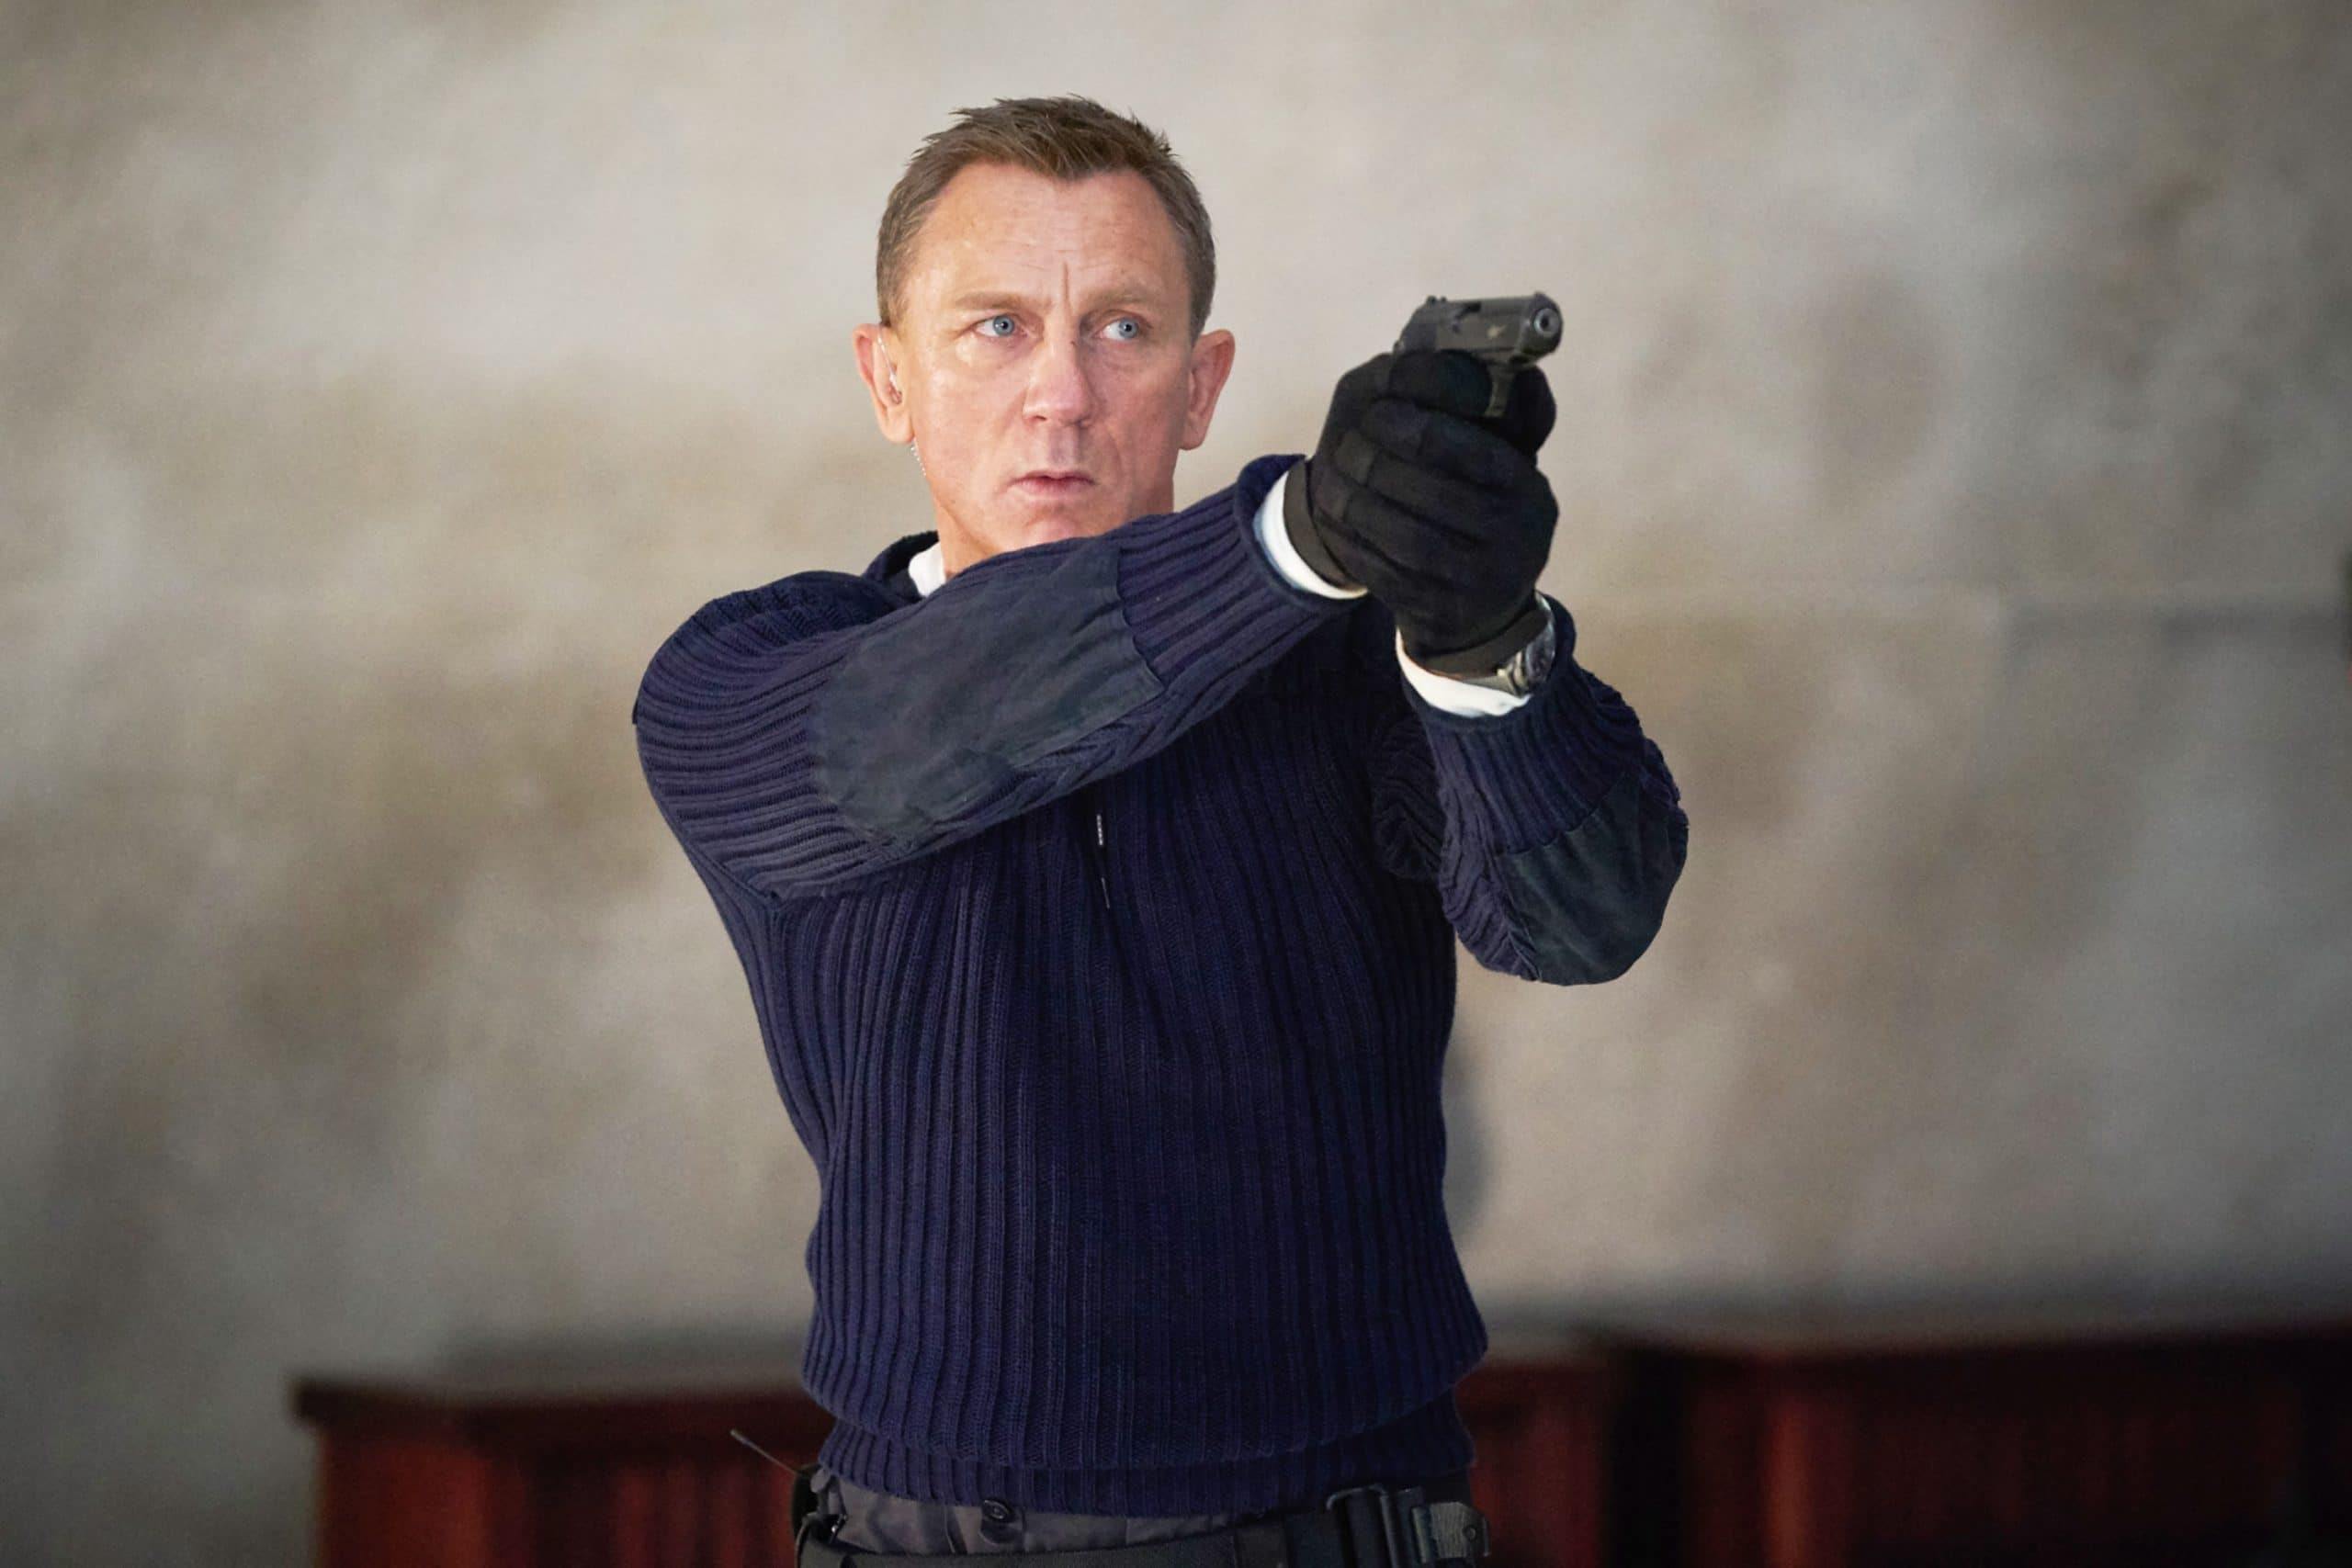 NO TIME TO DIE, Daniel Craig as James Bond, 2020